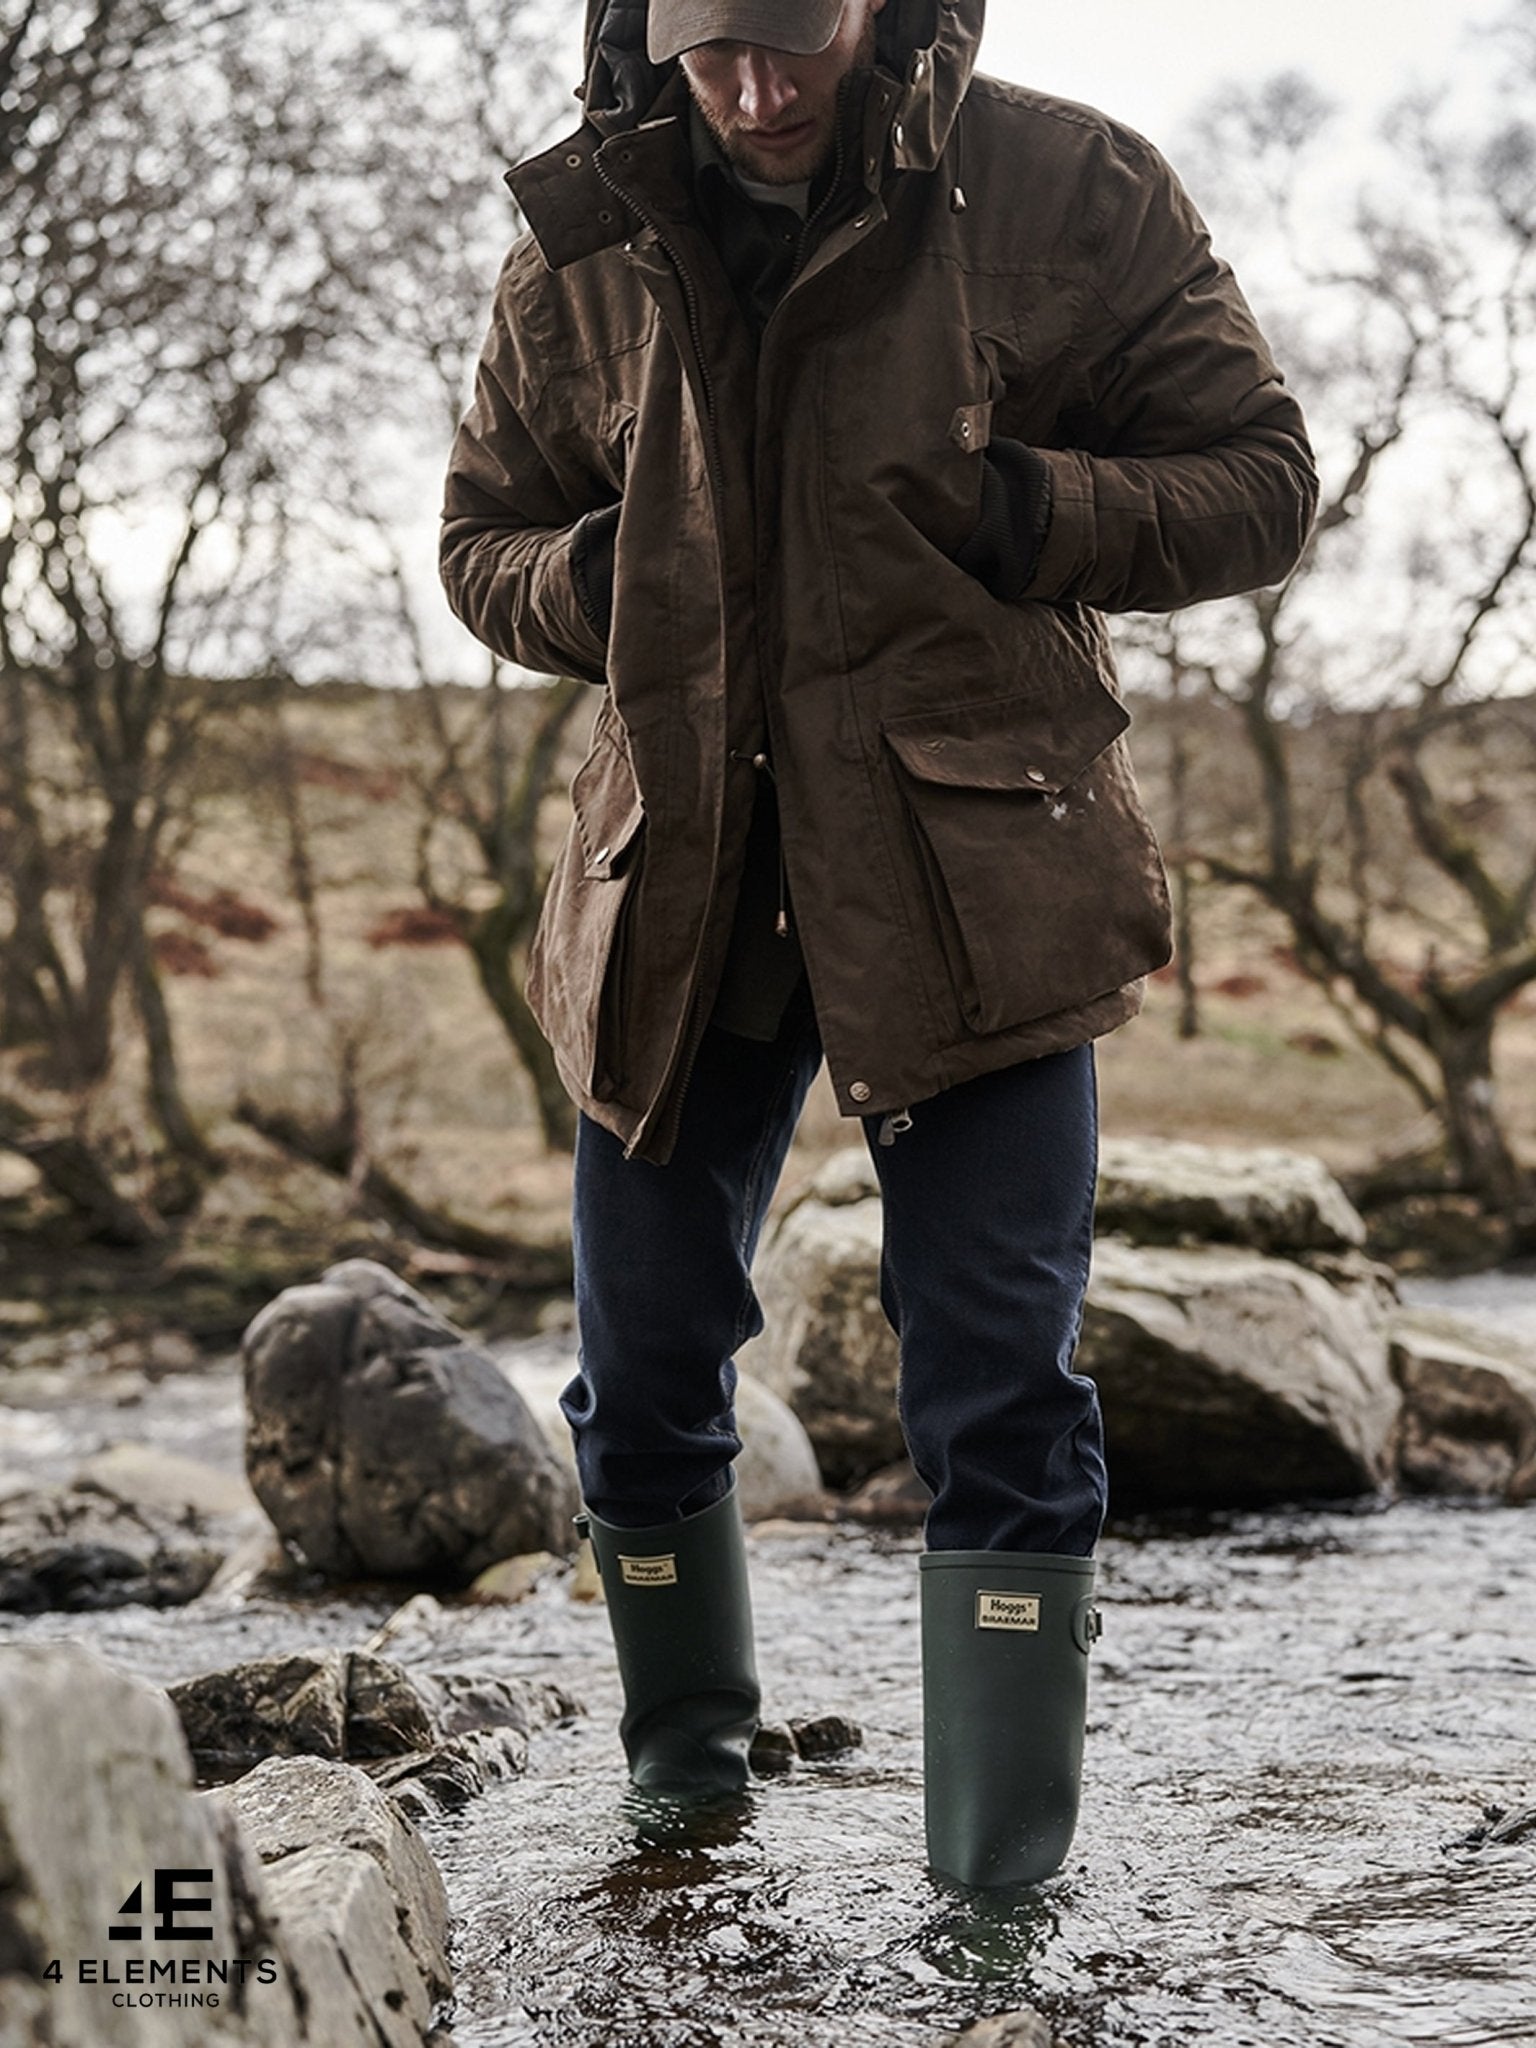 Hoggs of Fife Hoggs Of Fife - Braemar Wellington / welly boots waterproof Rubber outdoor rain boot Wellington Boots